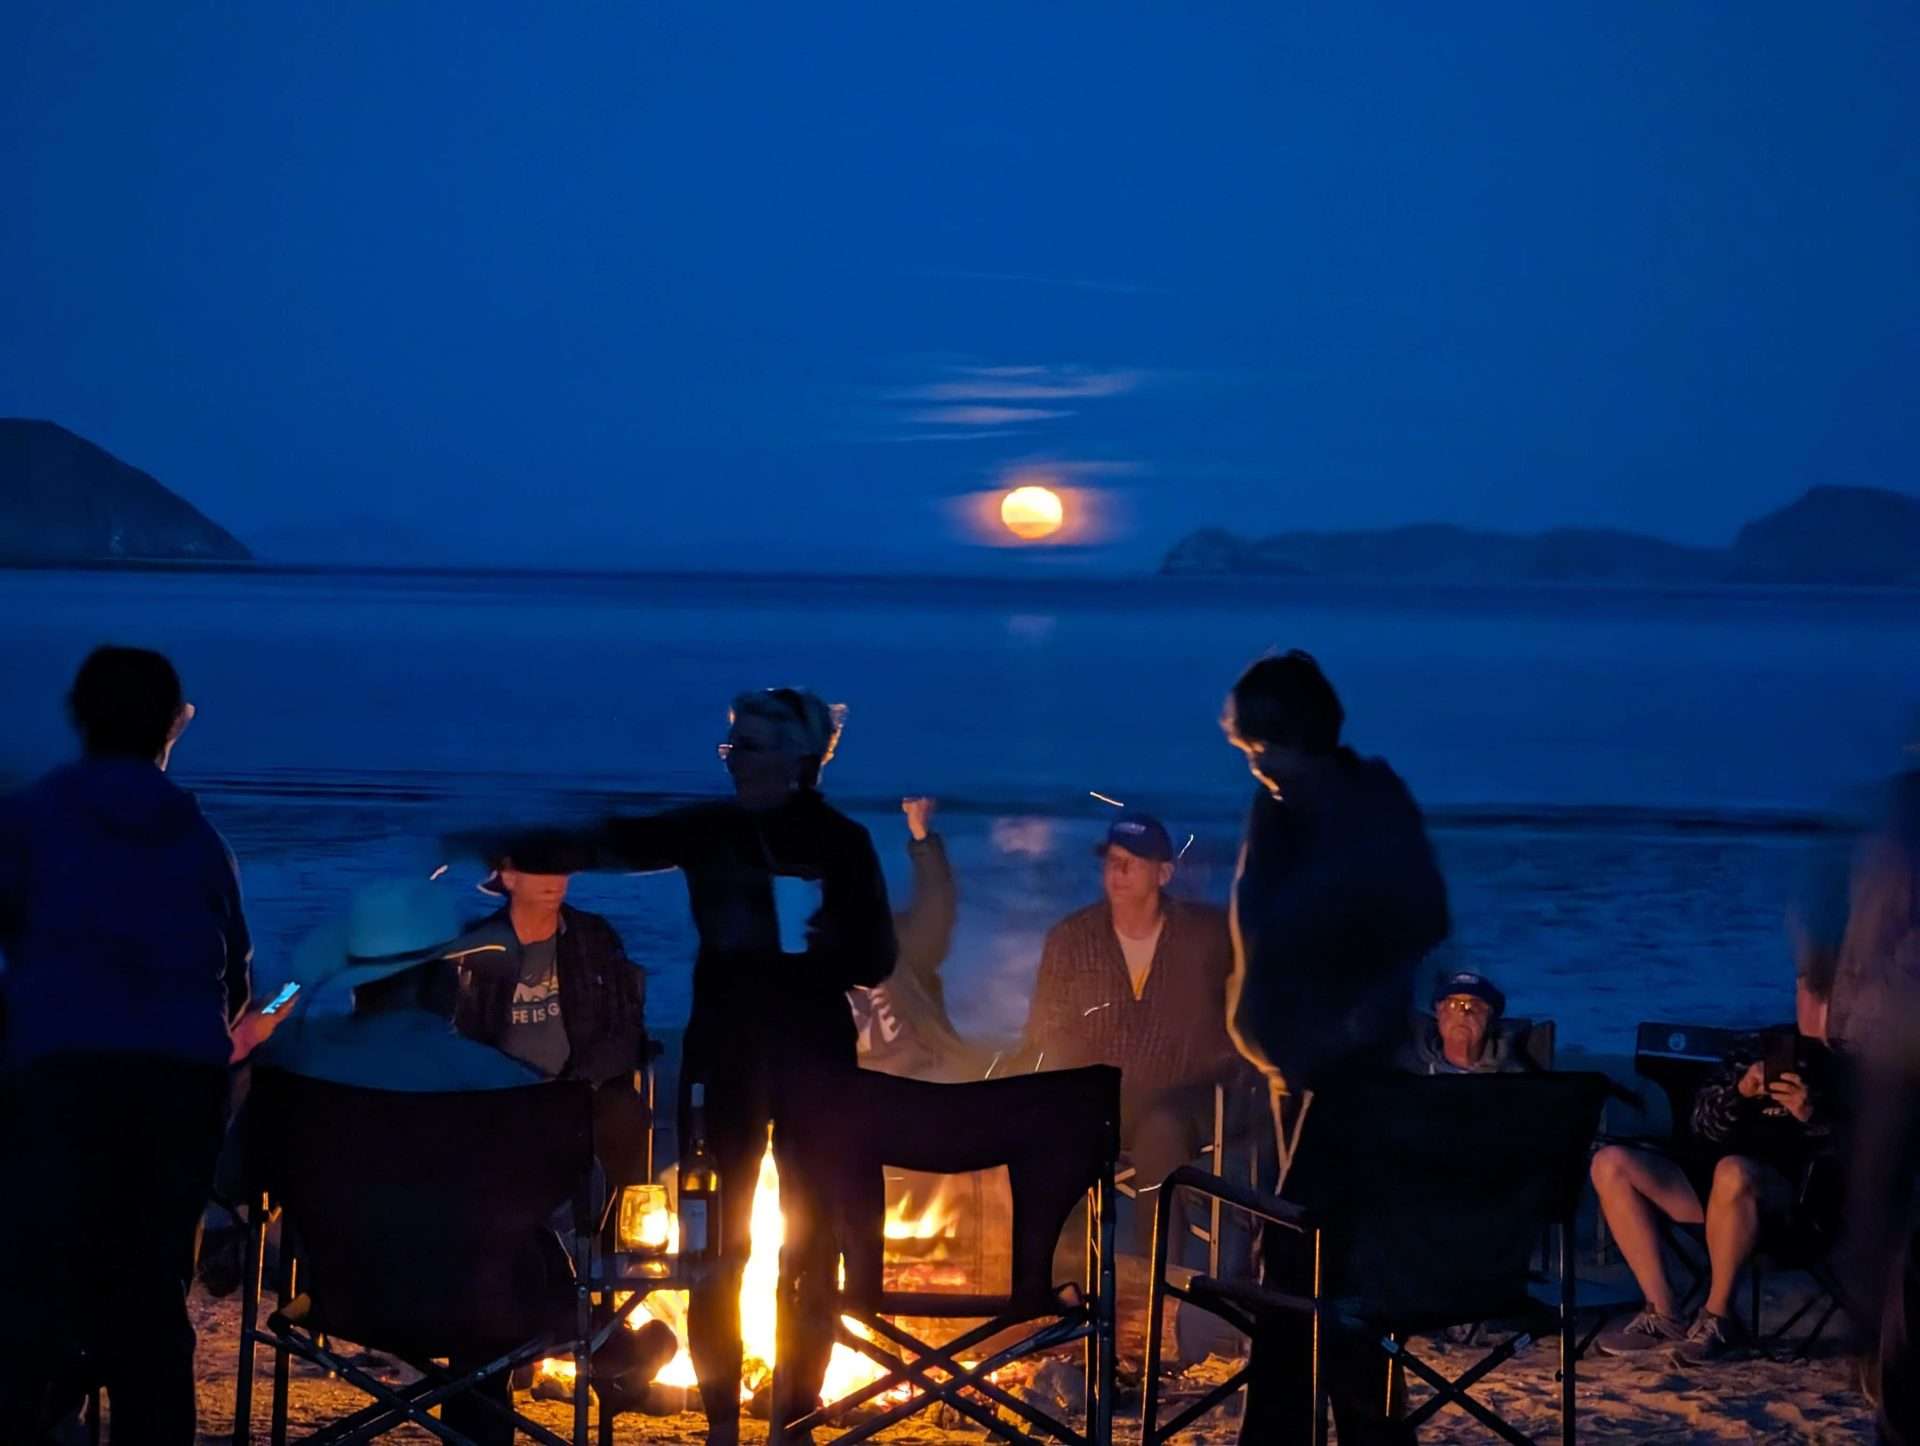 Friends around campfire at night